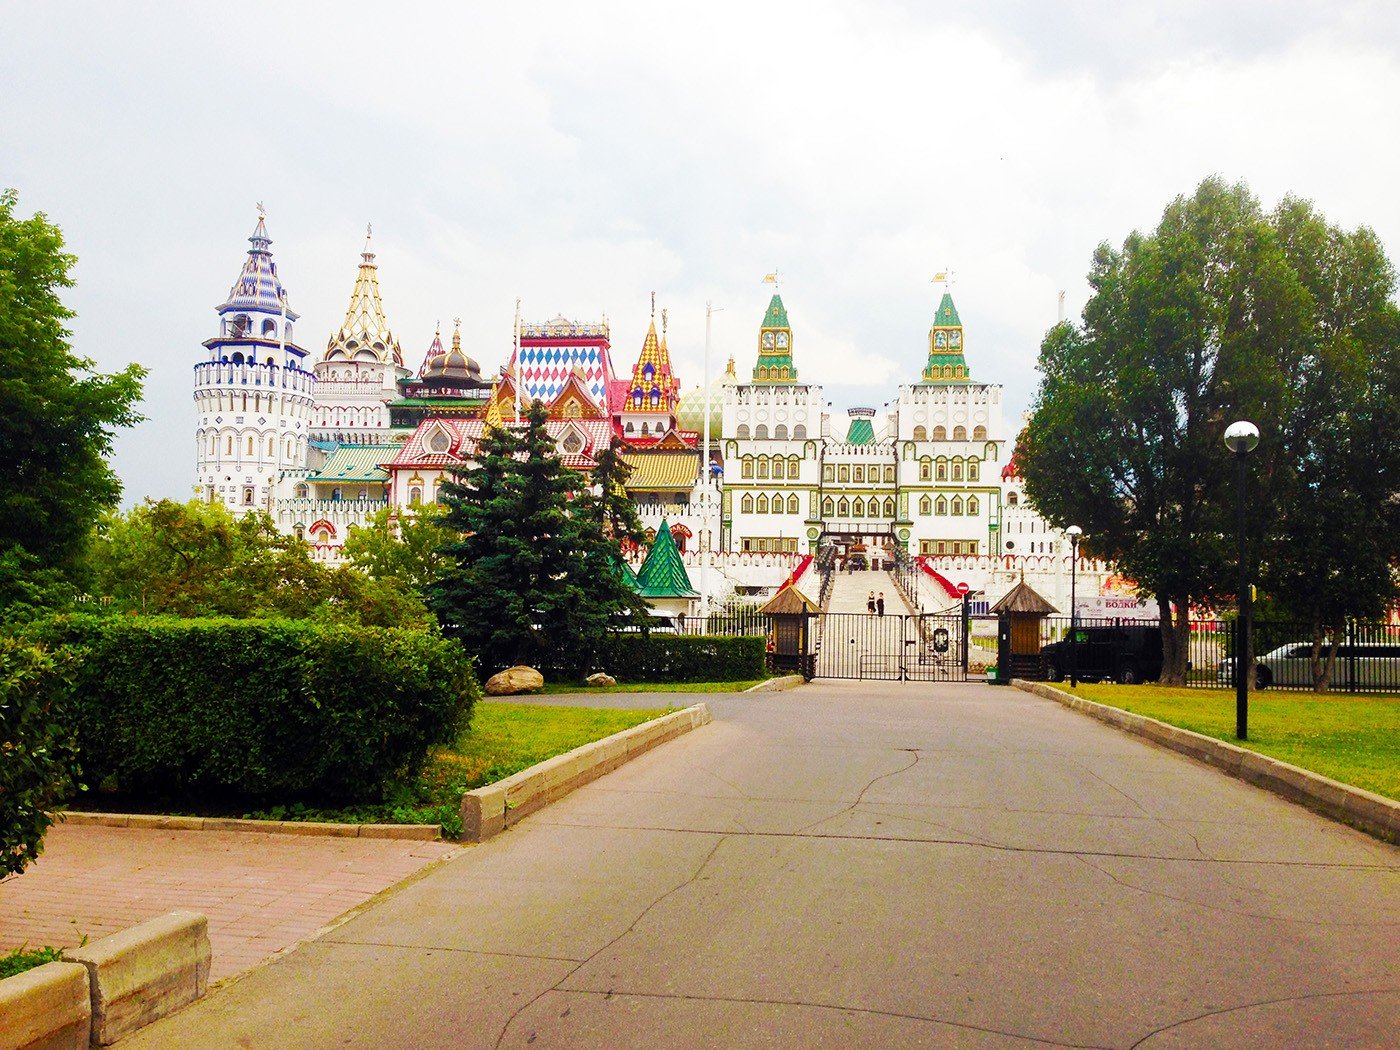 Парк Измайлово. Измайловский парк Москва. Измайловский парк Измайлово. Москва Измайлово Кремль и парк. Измайлово сайт парка